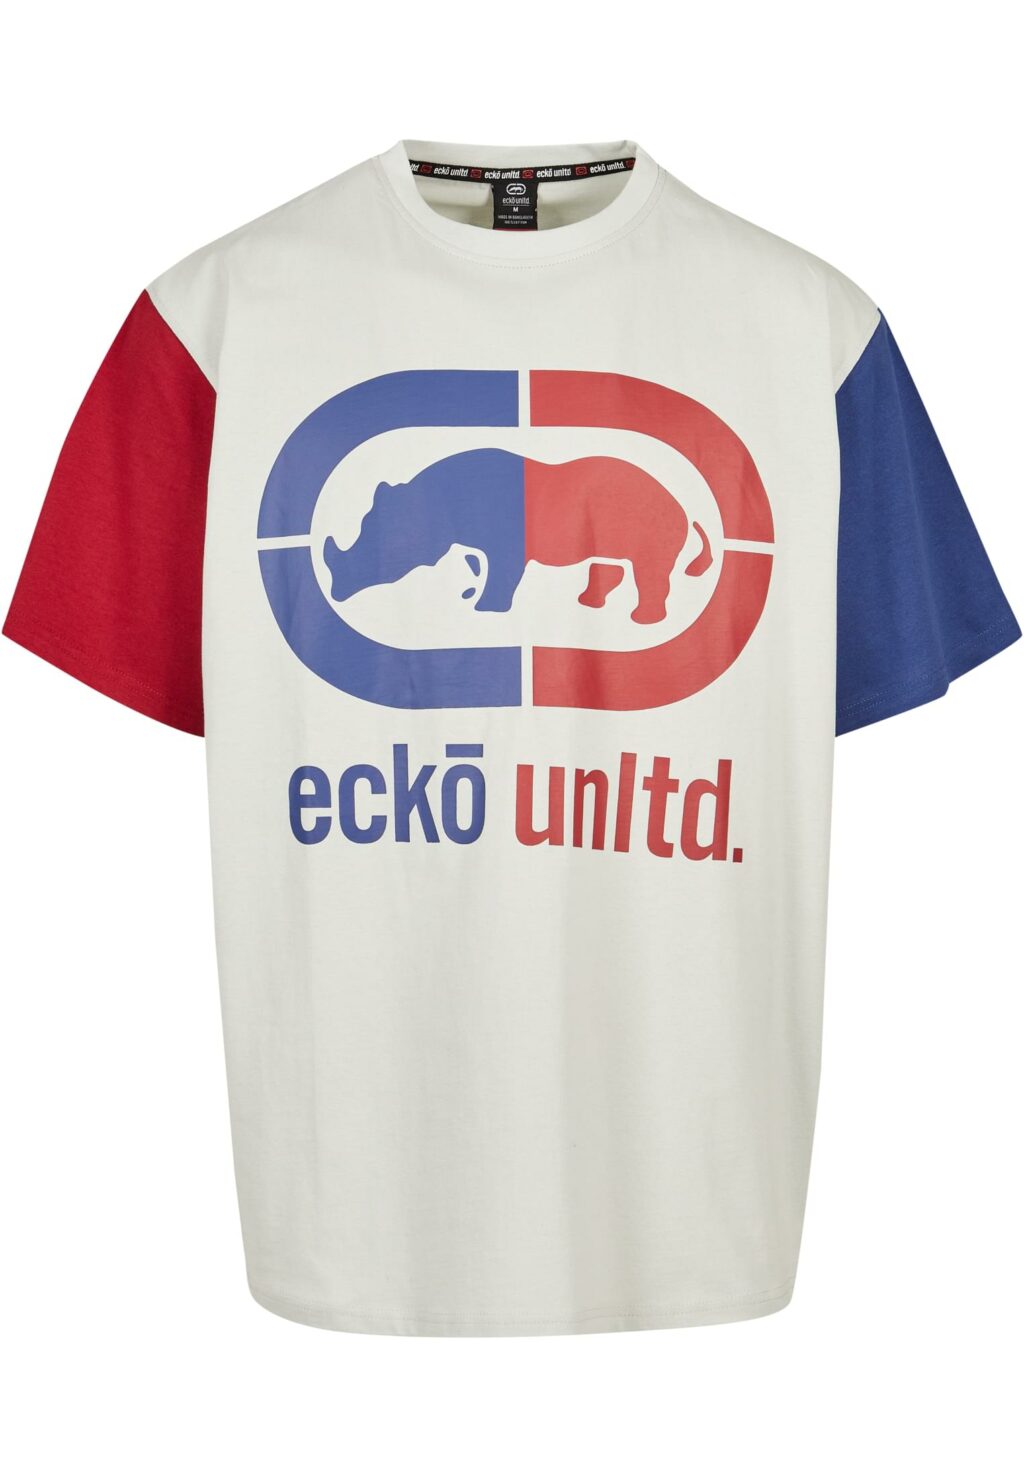 Ecko Unltd. Grande T-Shirt grey/red/blue ECKOTS1137